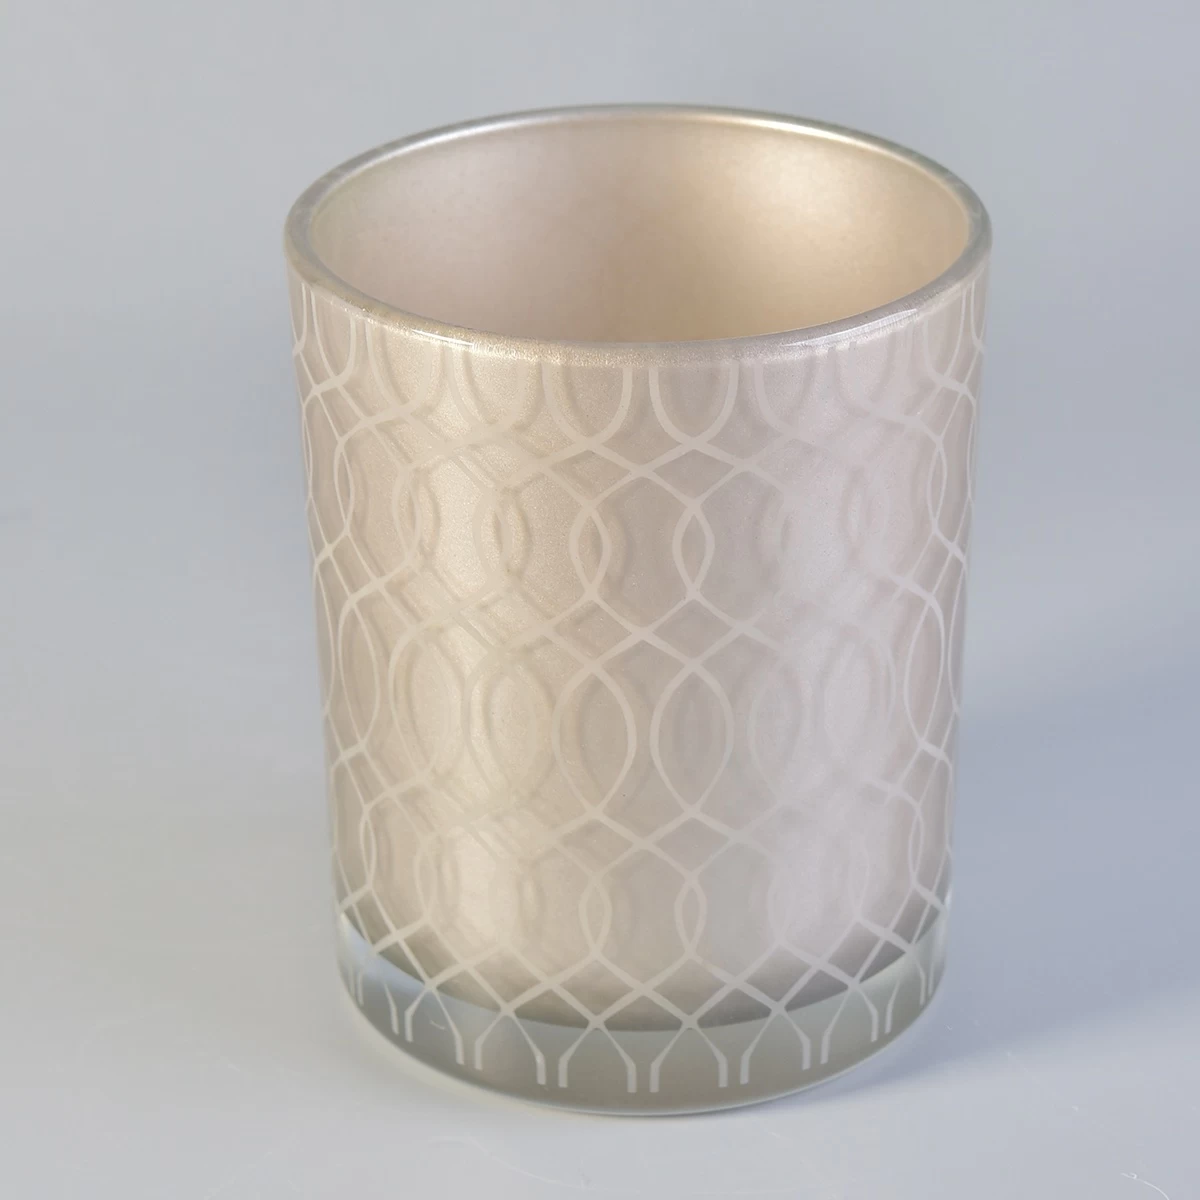 Hot sales tealight custom cylinder glass holder for candle making